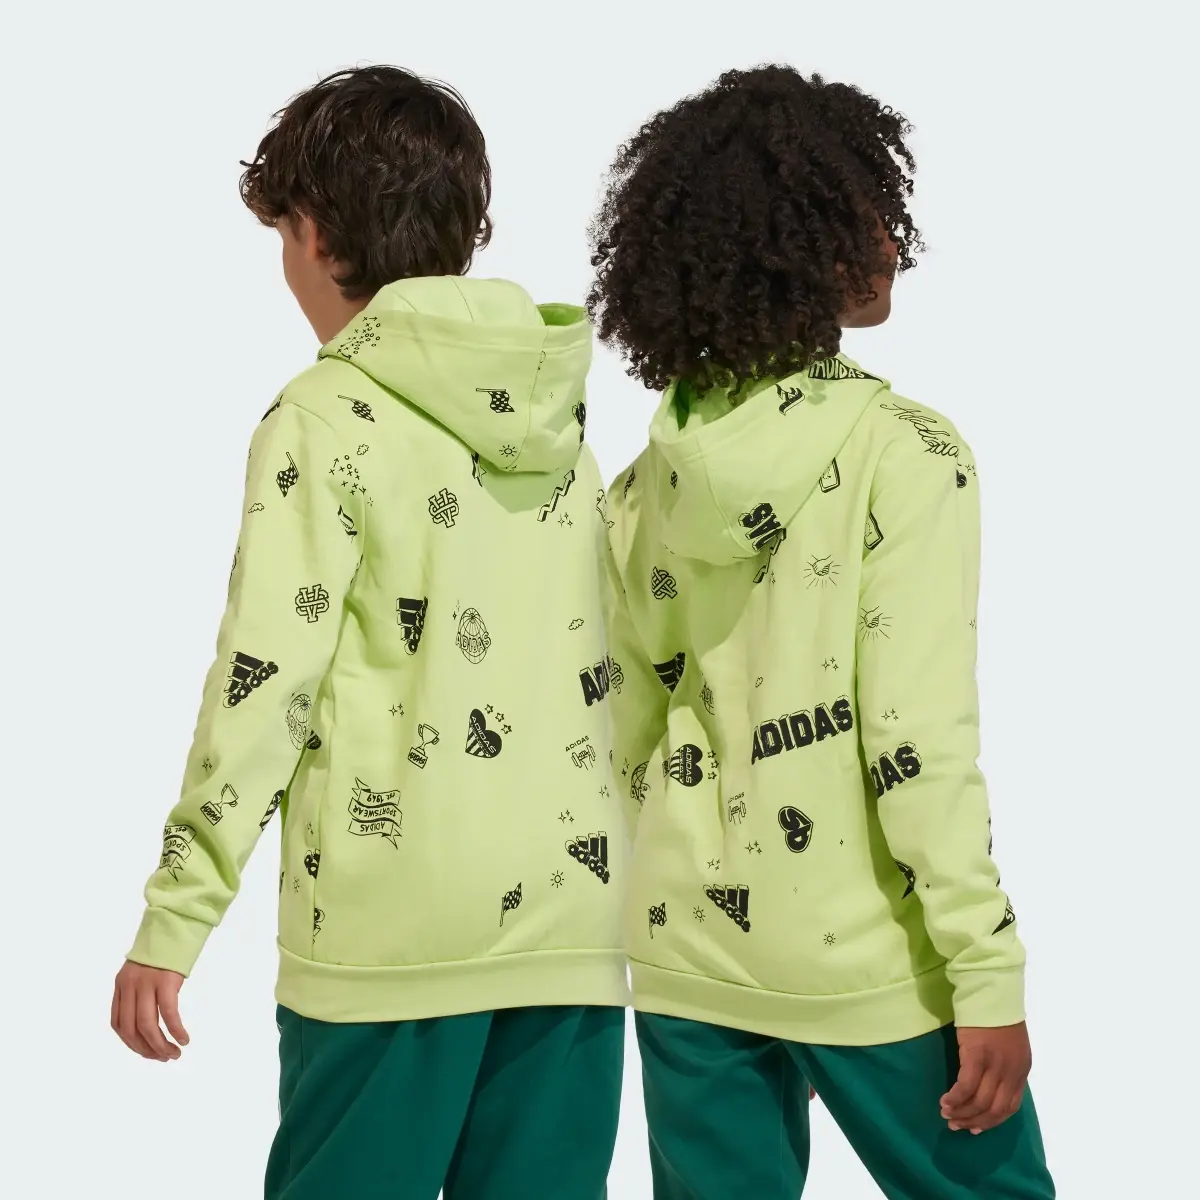 Adidas Brand Love Allover Print Kids Kapuzenjacke. 2